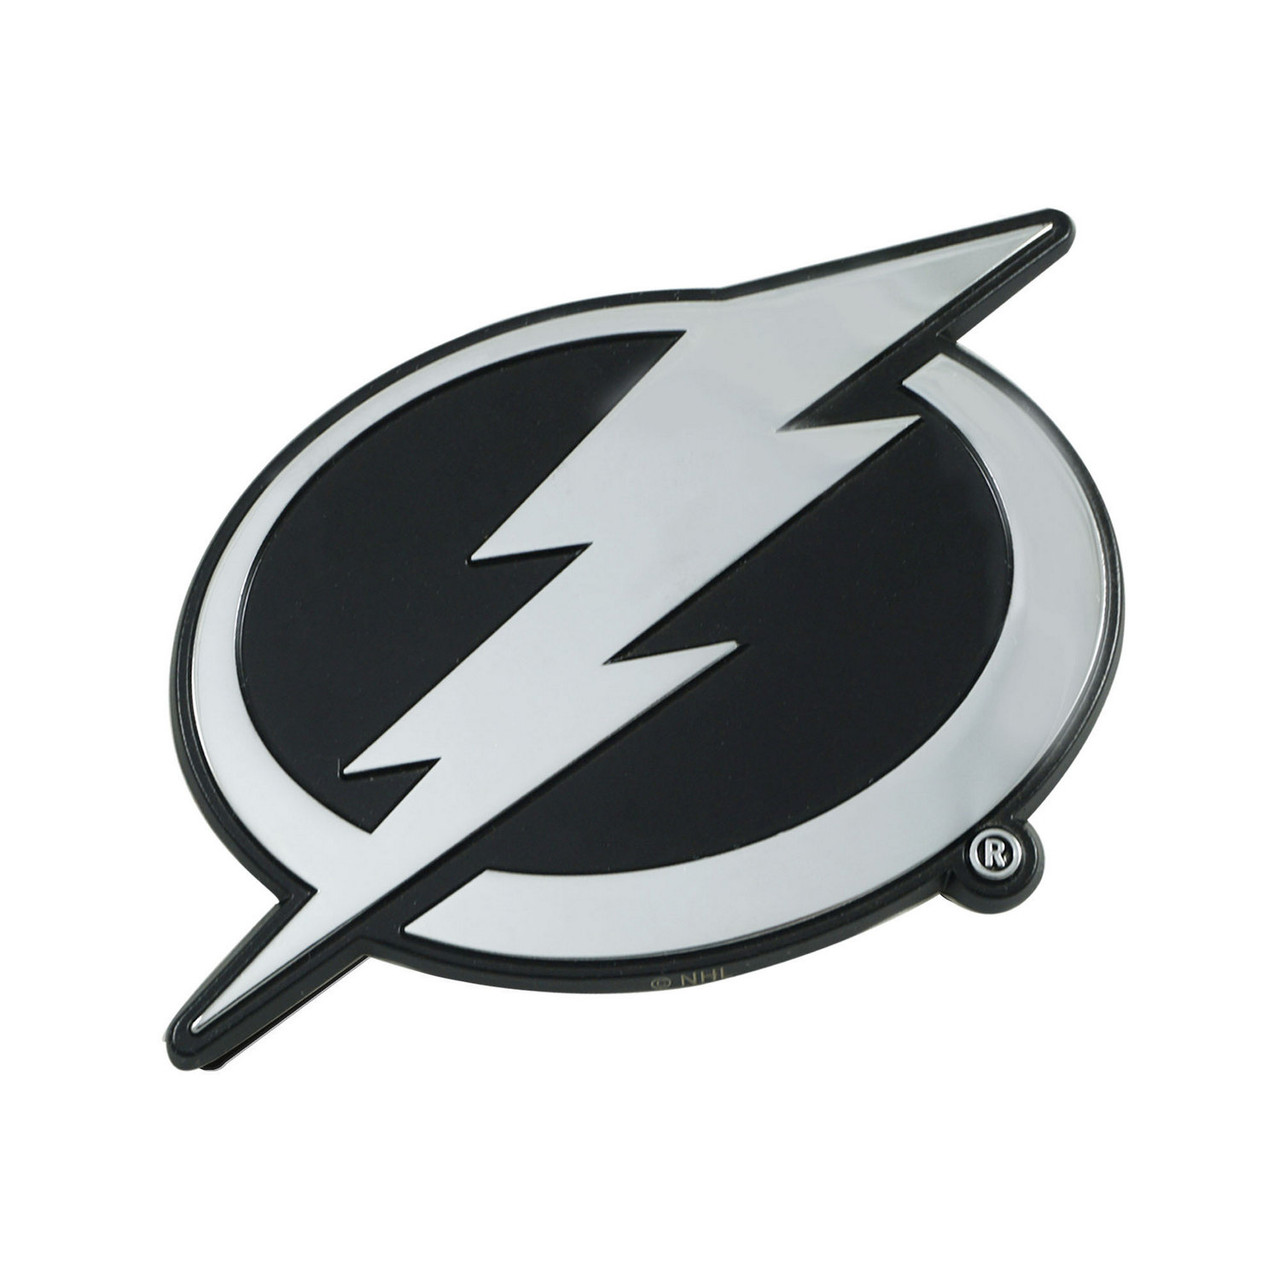 Tampa Bay Lightning Bolts - Destination Tampa Bay™